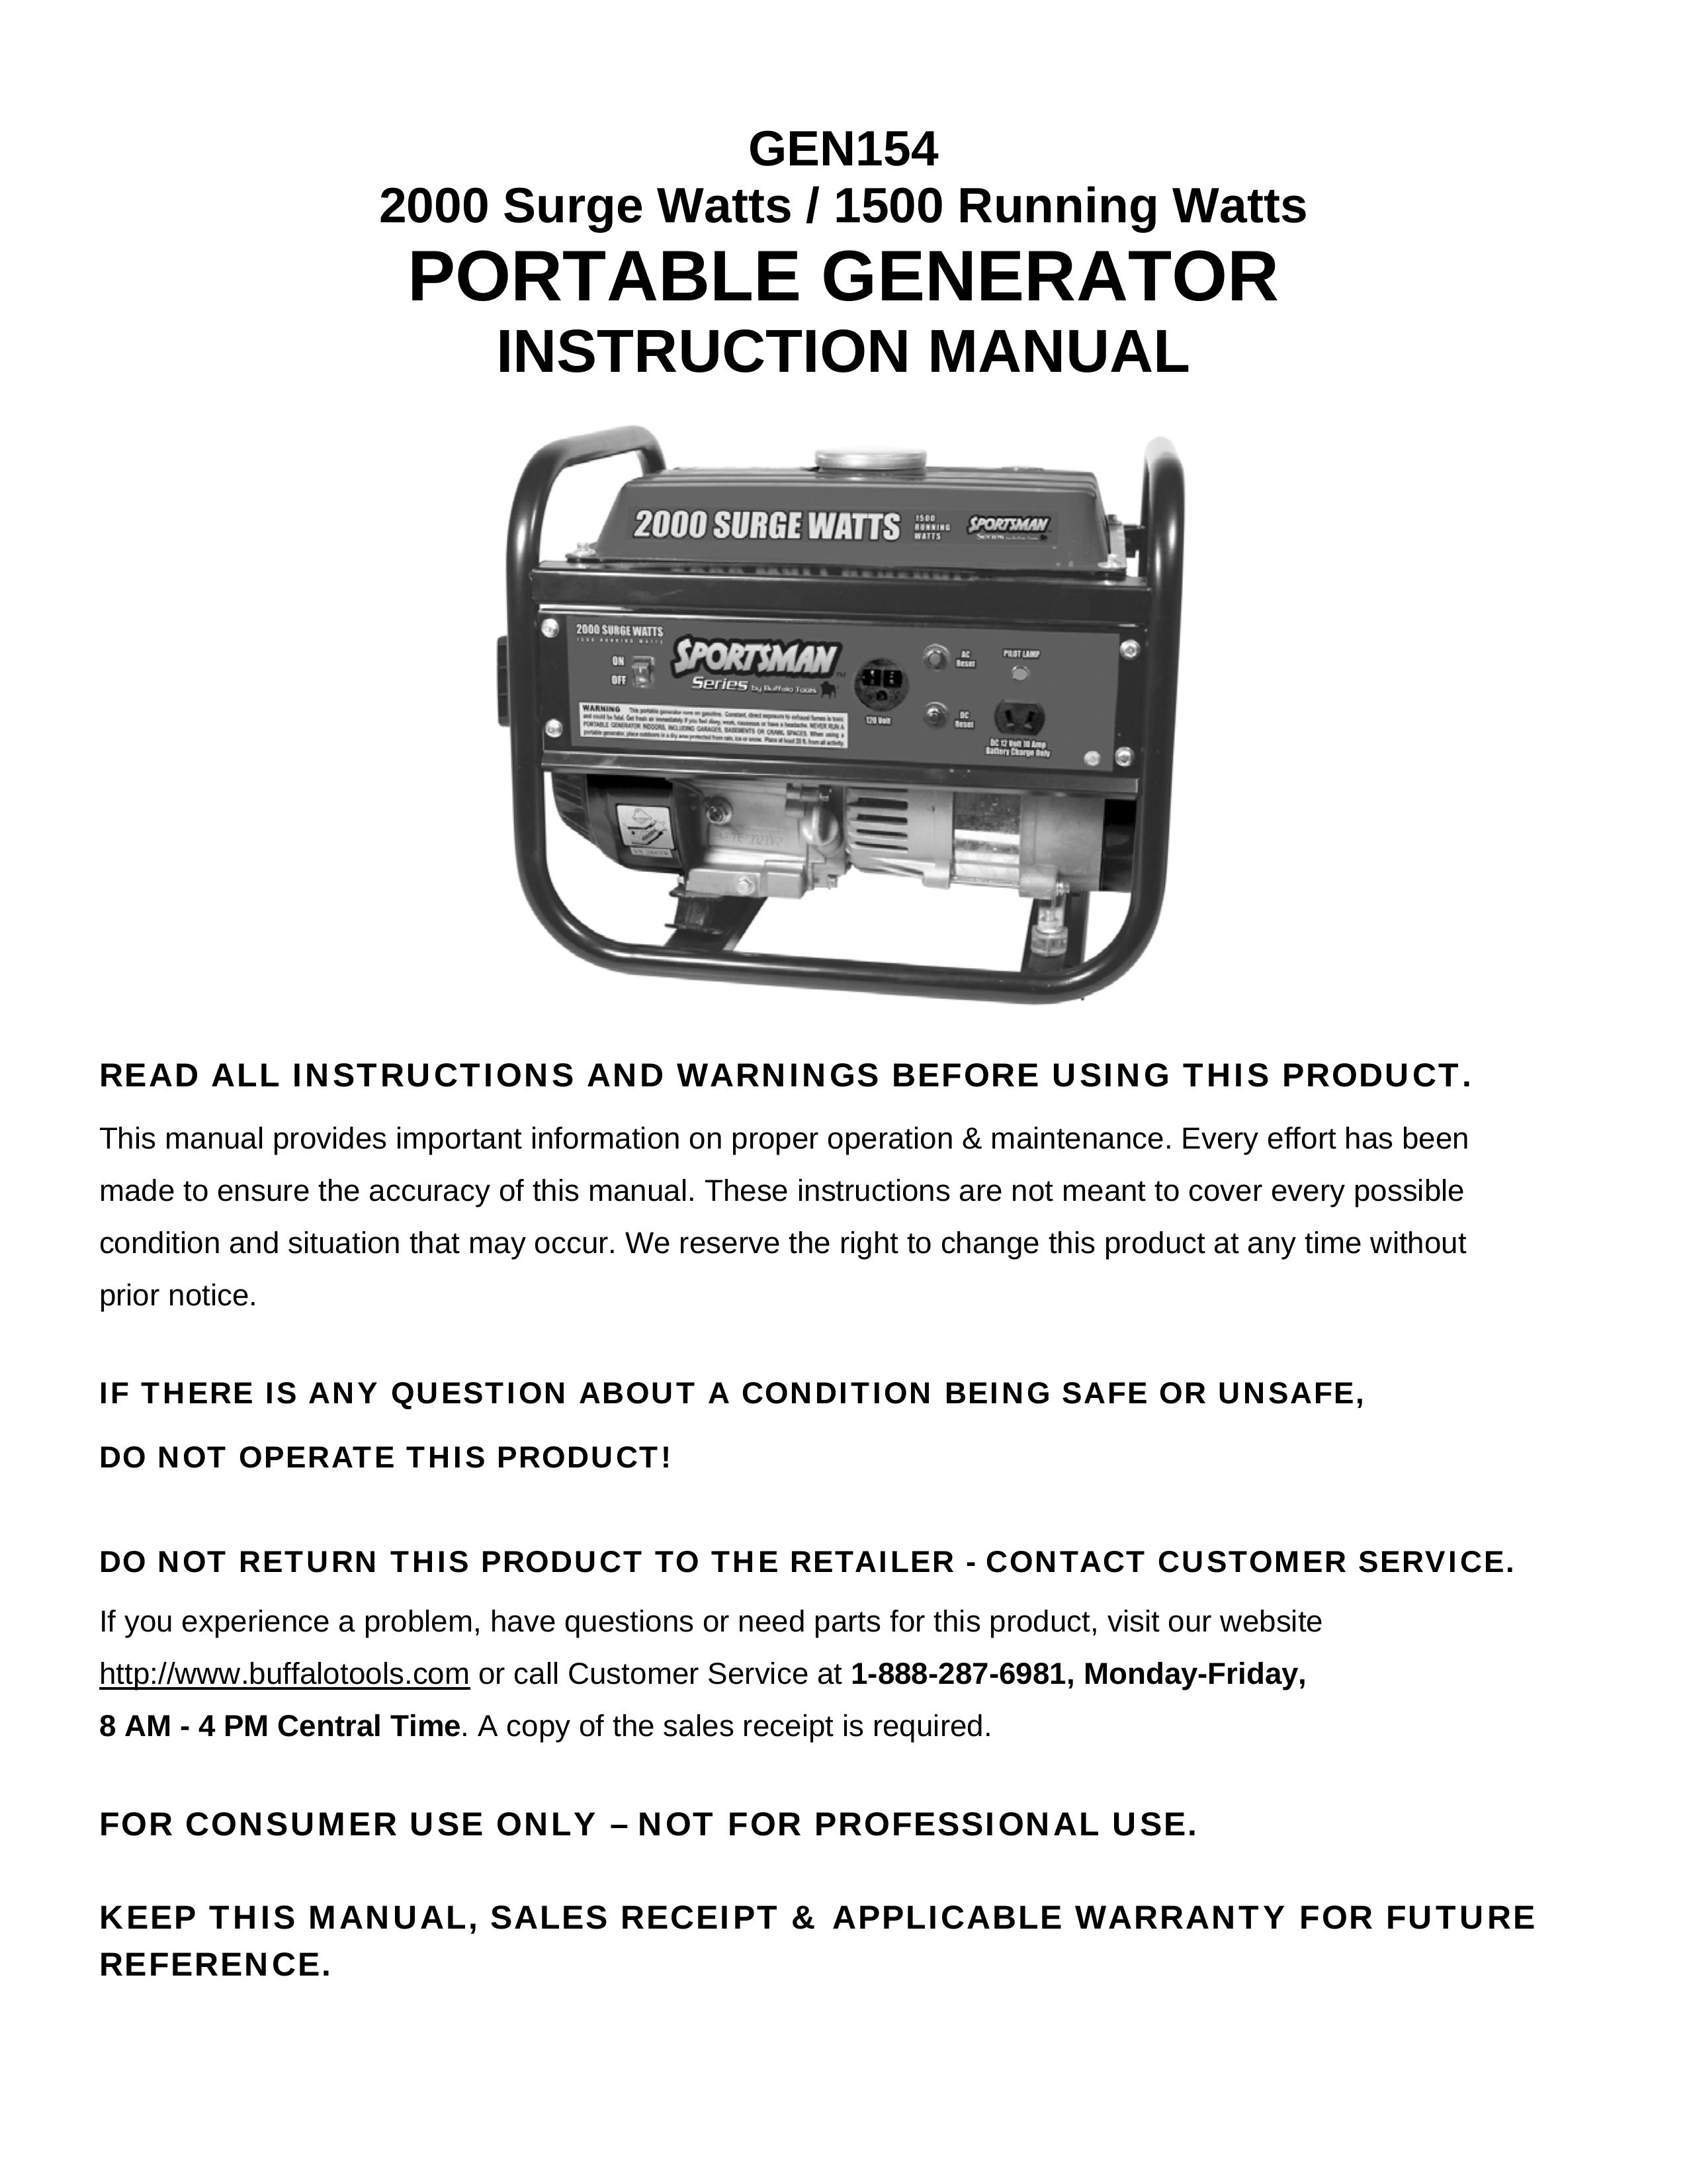 Buffalo Tools GEN154 Portable Generator User Manual